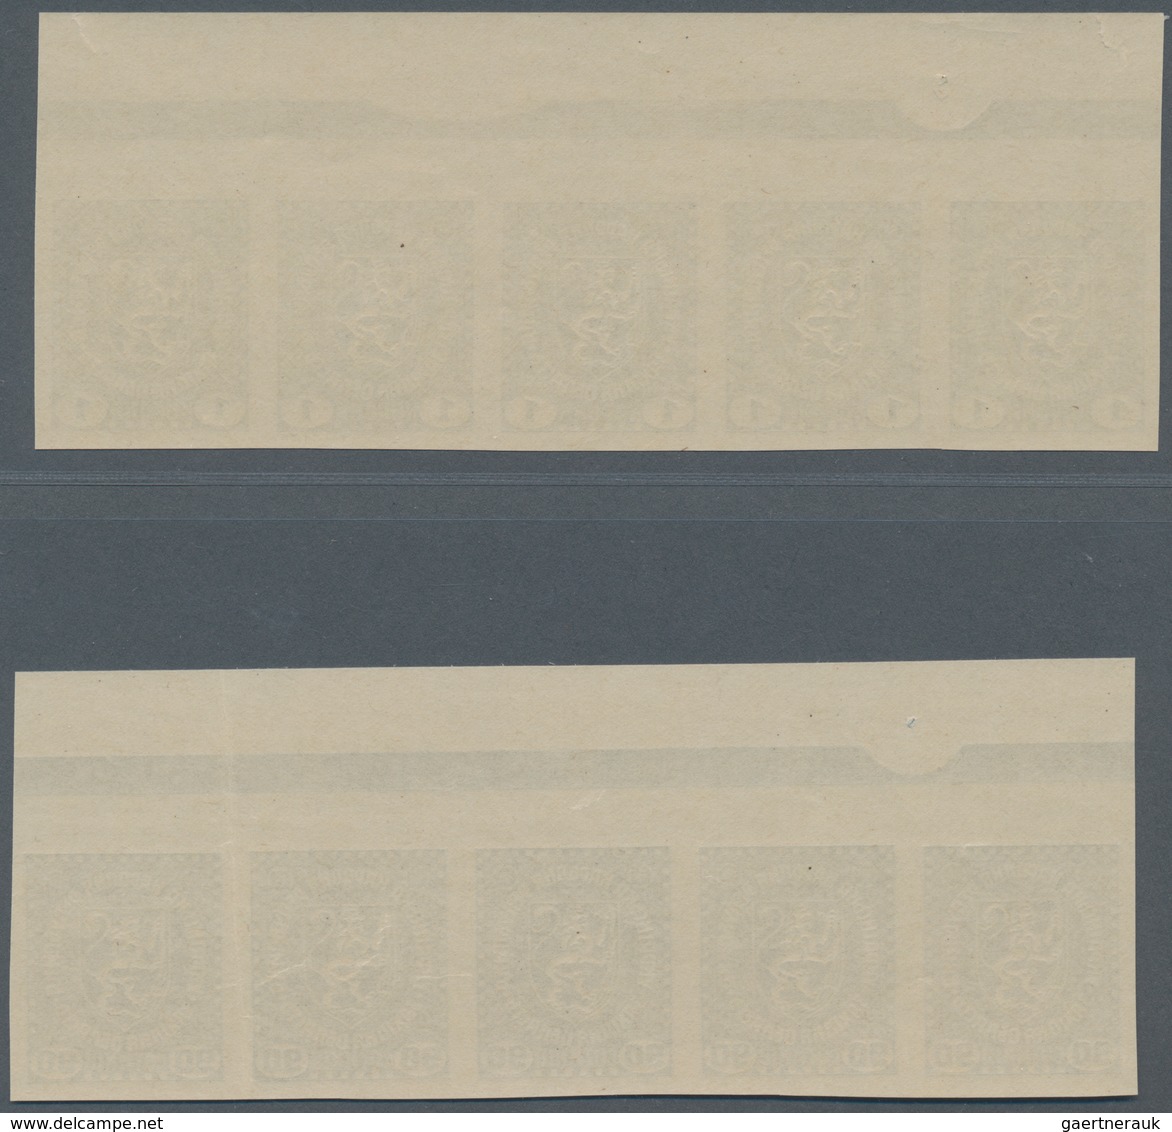 Westukraine: 1919/prepared for but unissued, 10 S.-3 Kr. complete imperforate set of 12 in top margi